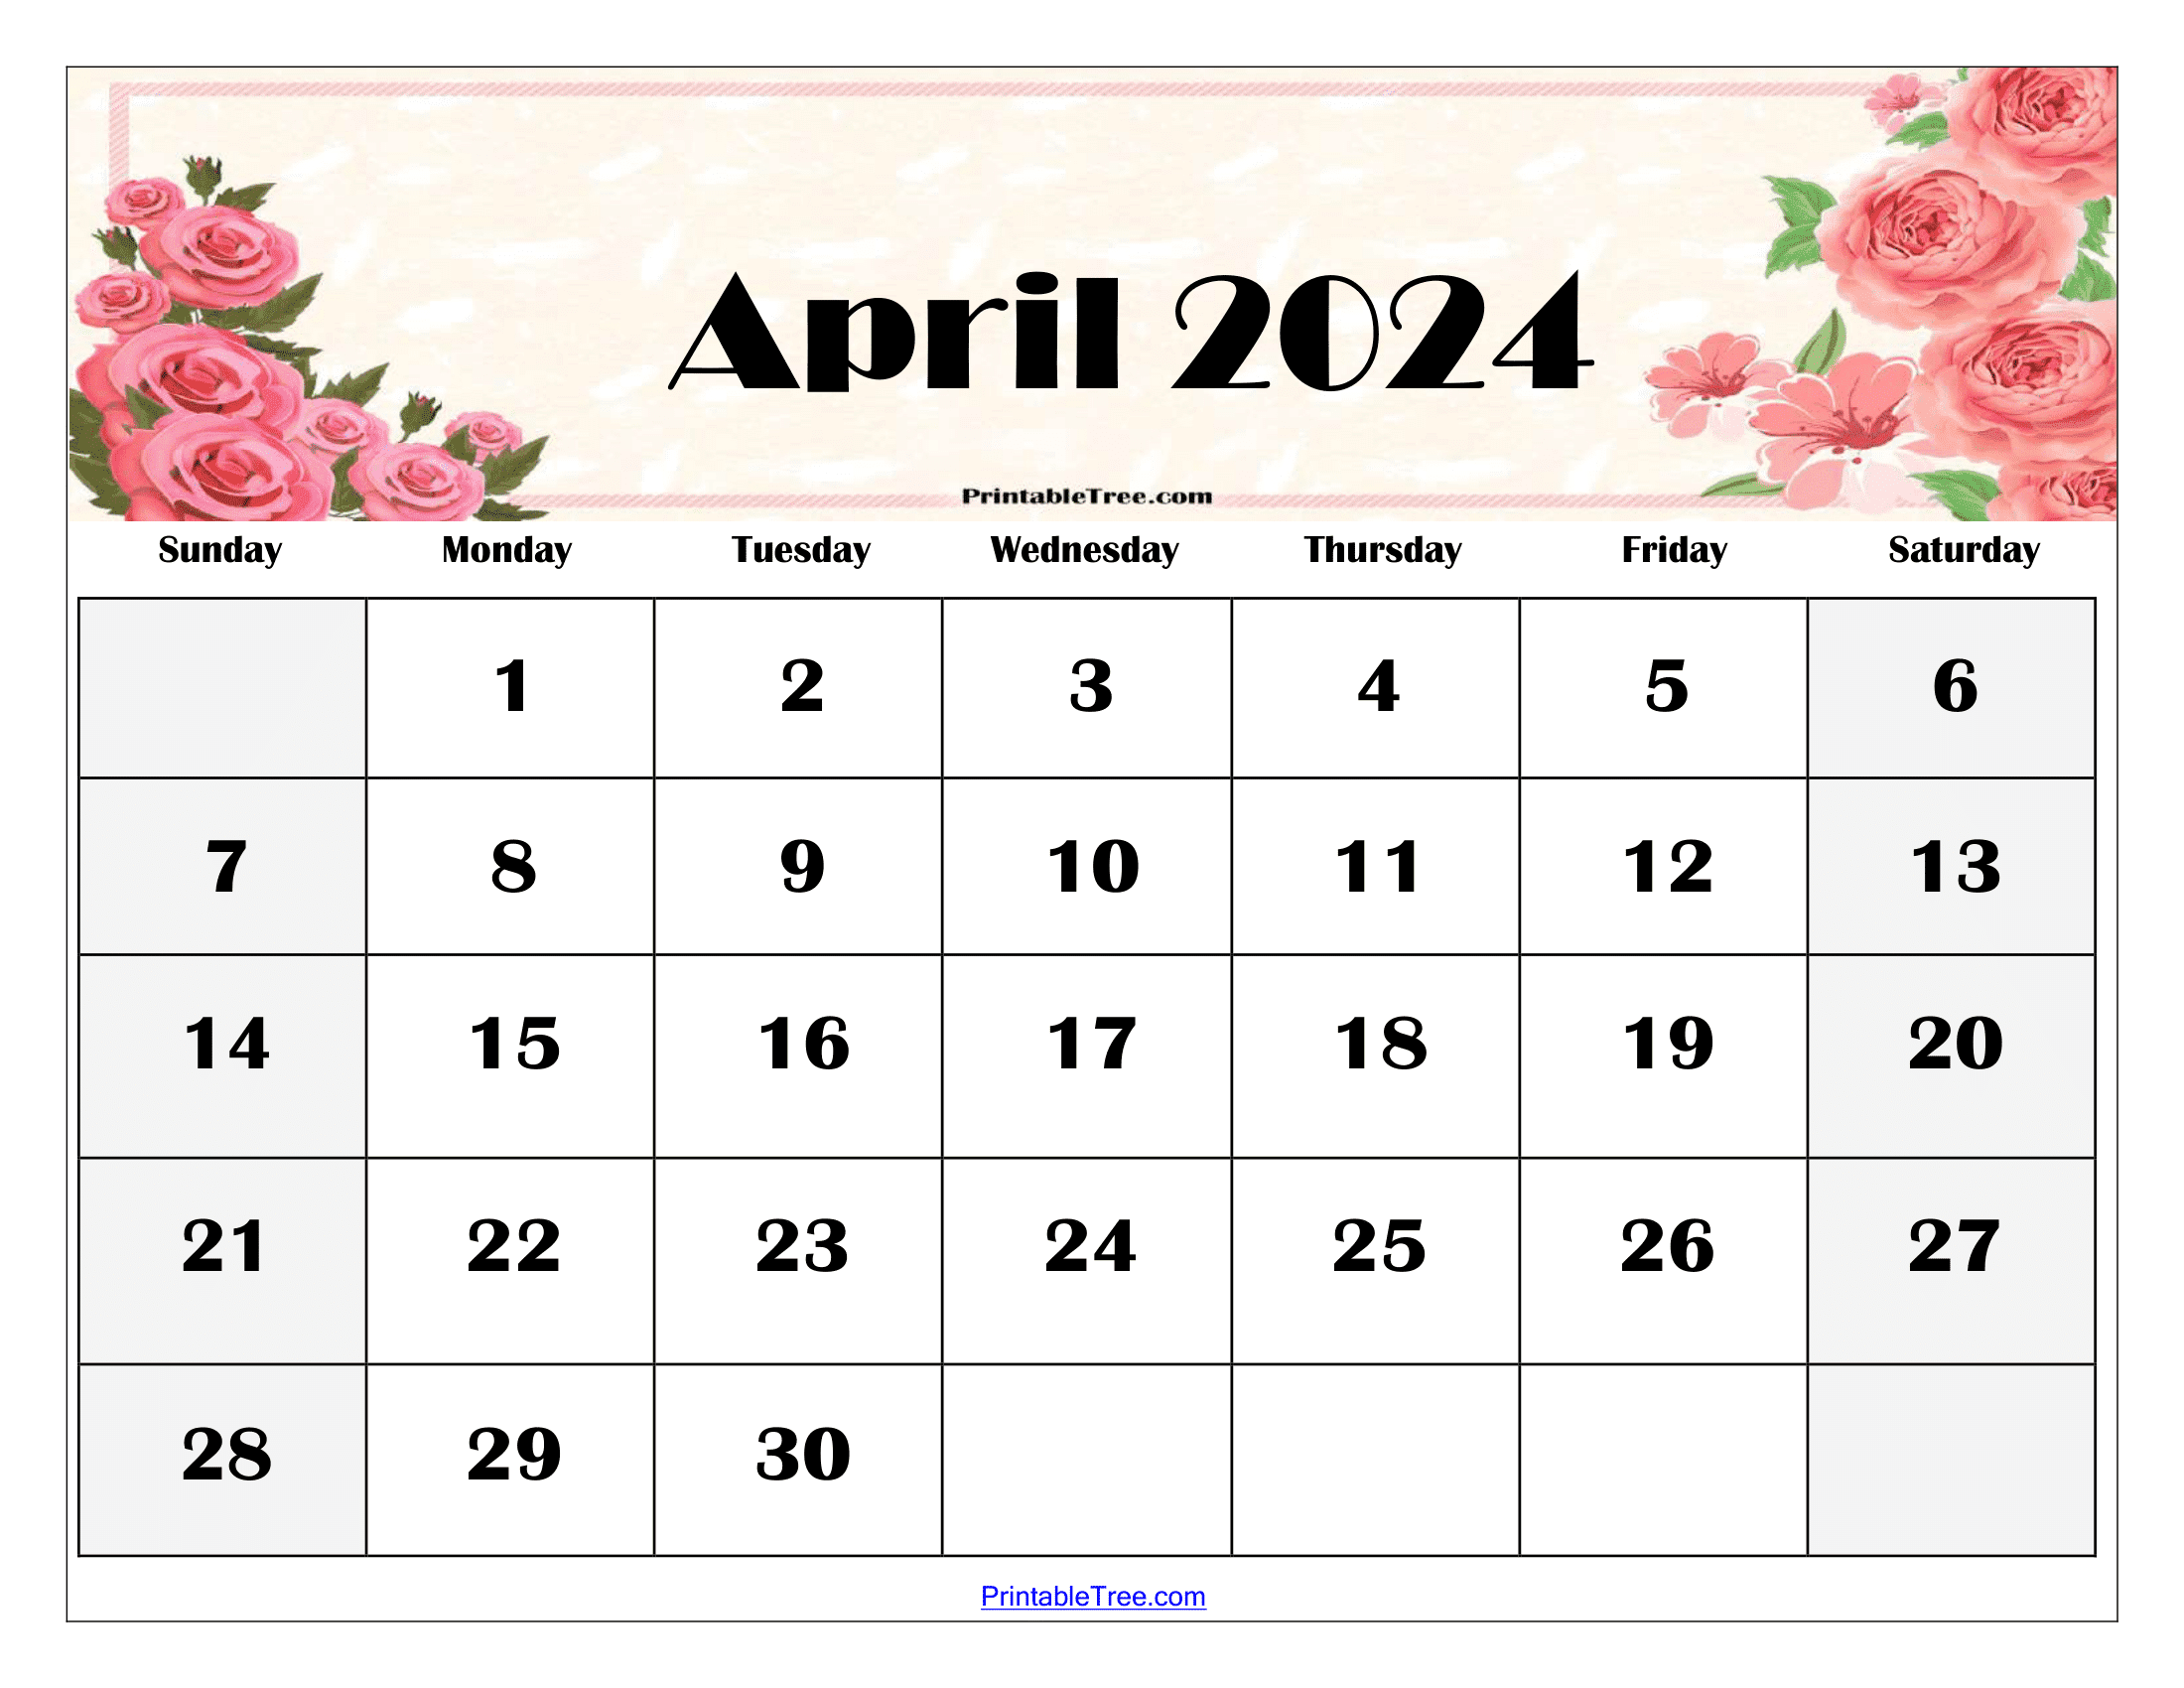 Printable April 2024 Calendar Planner Britt Colleen - Free Printable April And May 2024 Calendar